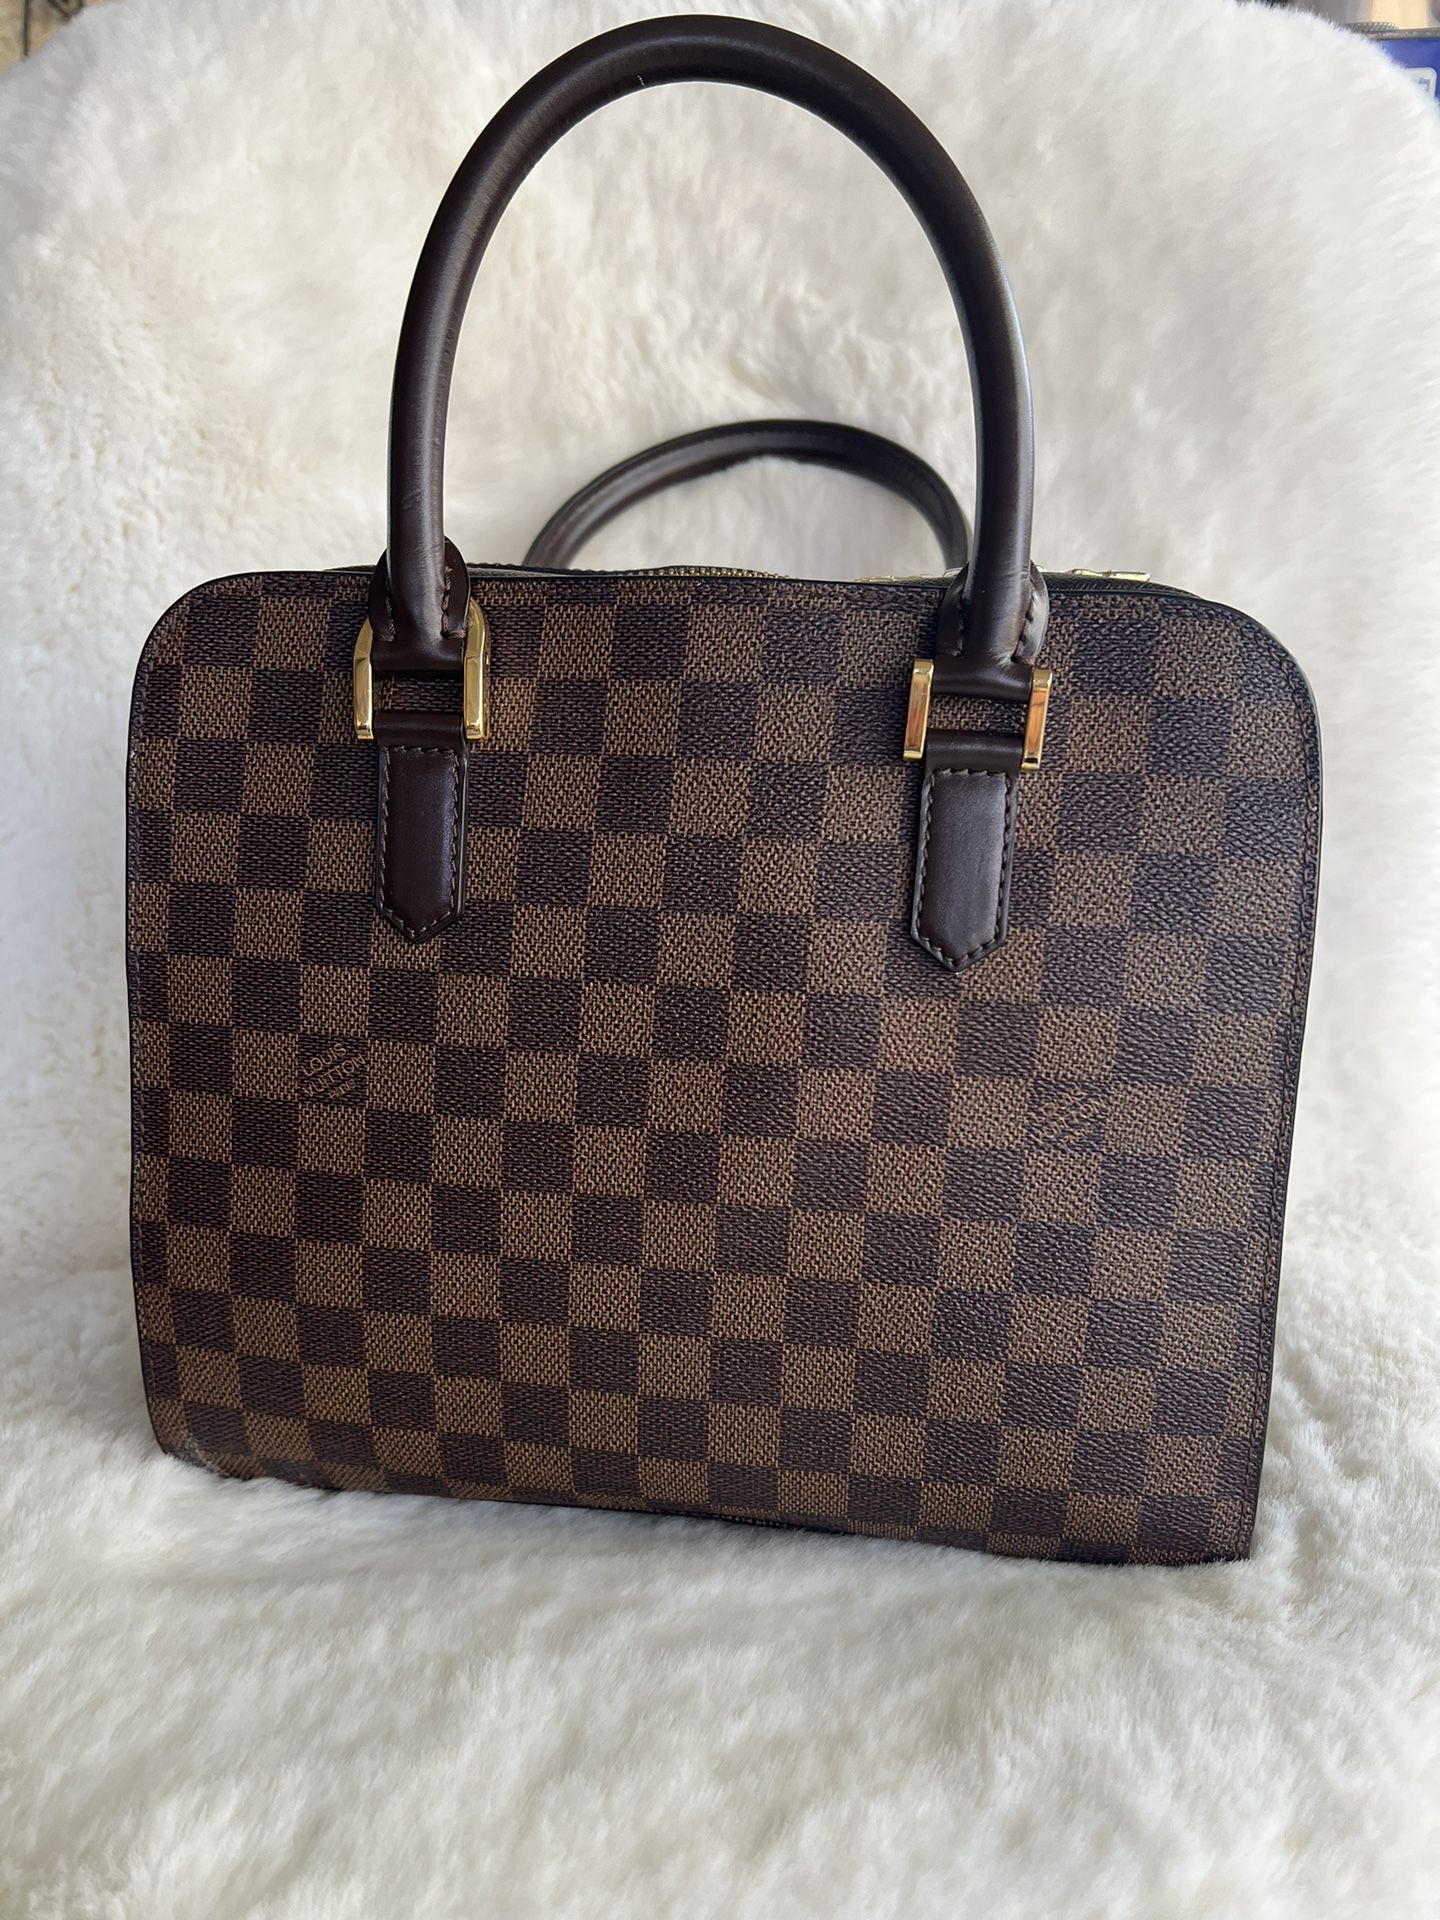 Louis Vuitton Damier Ebene Triana Handbag for Sale in Lancaster, CA -  OfferUp